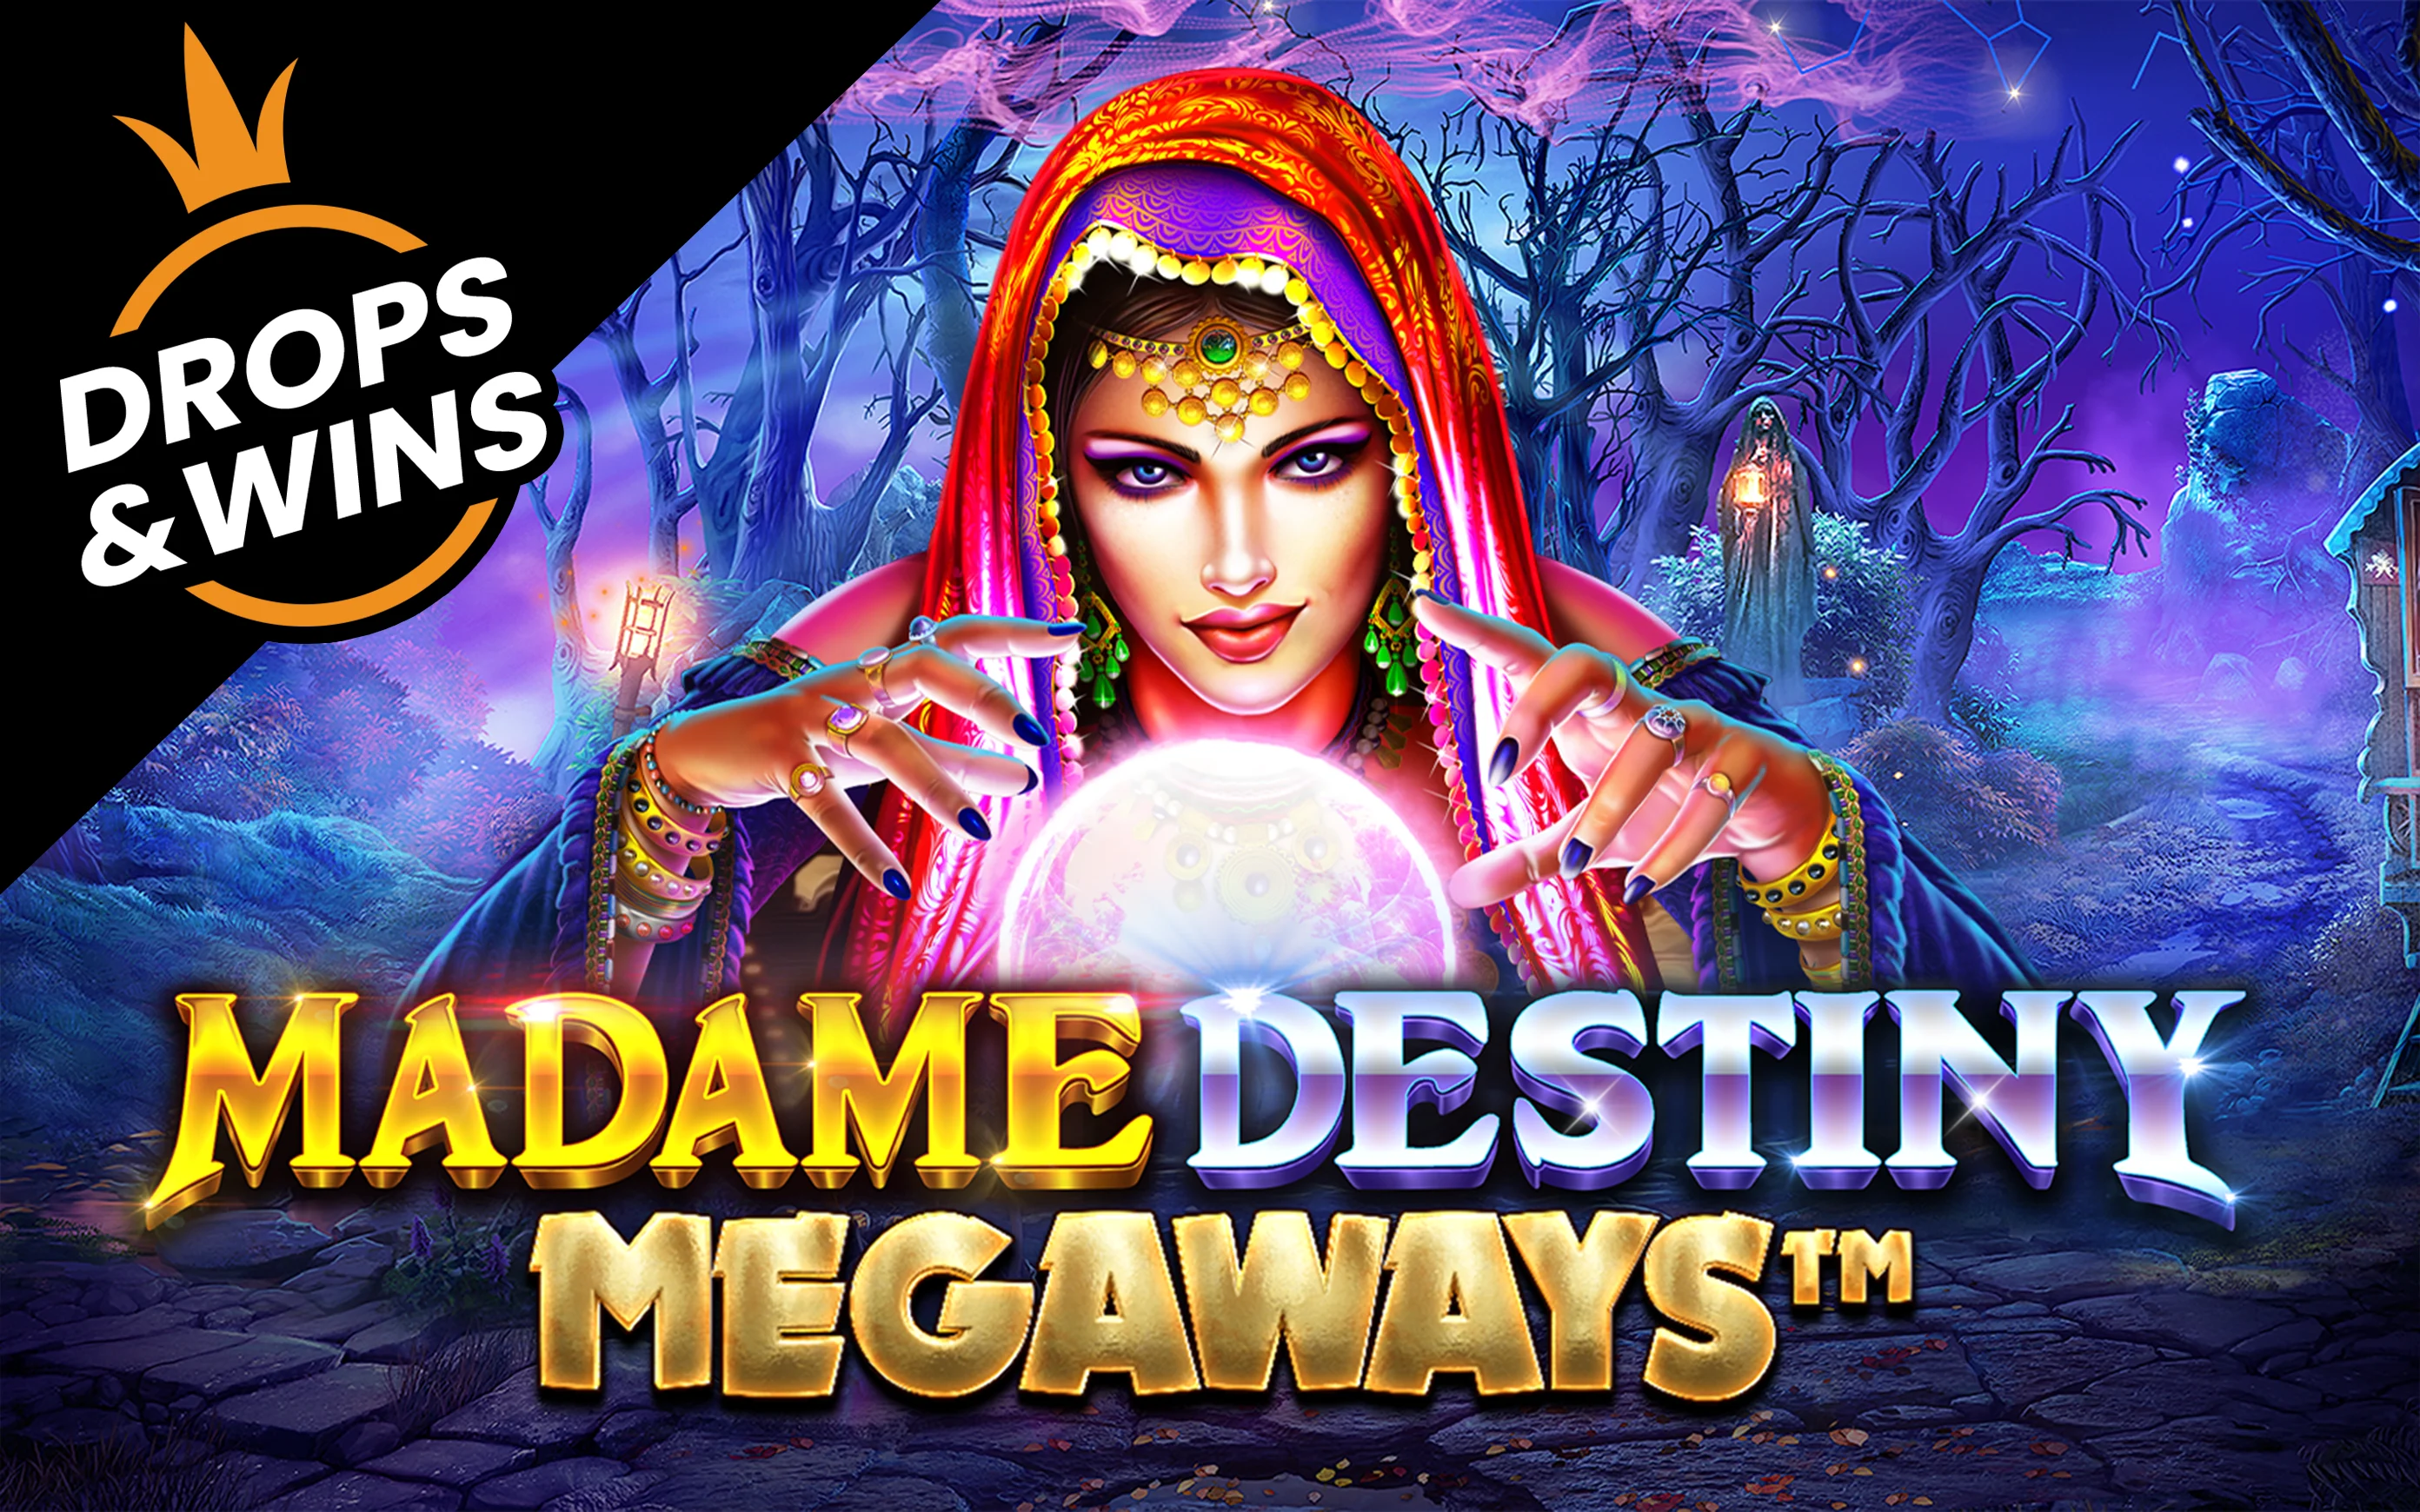 Gioca a Madame Destiny Megaways™ sul casino online Starcasino.be